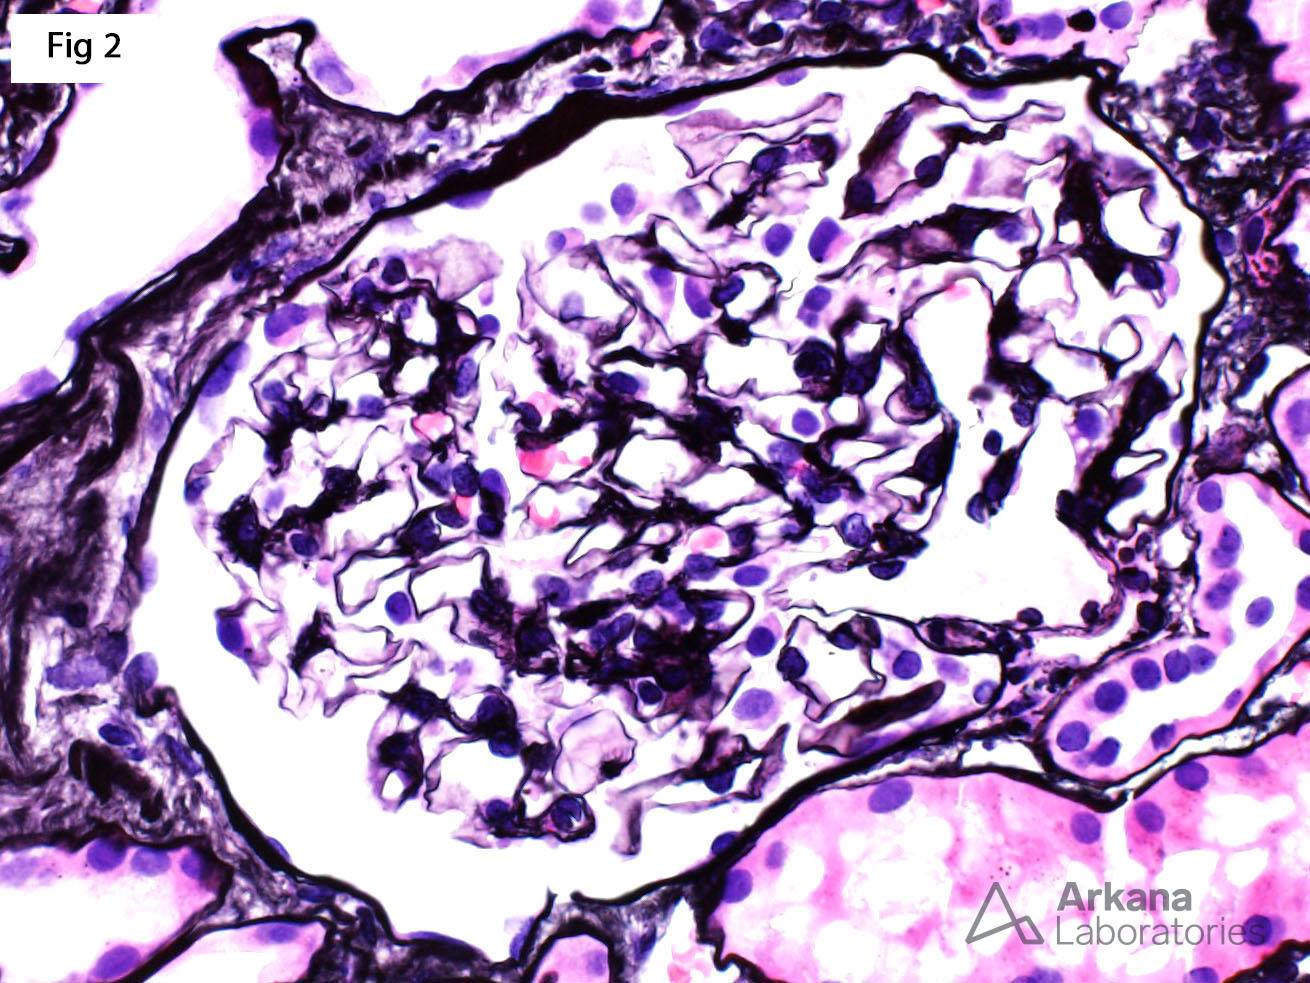 glomeruli are completely unremarkable by light microscopy, AKI